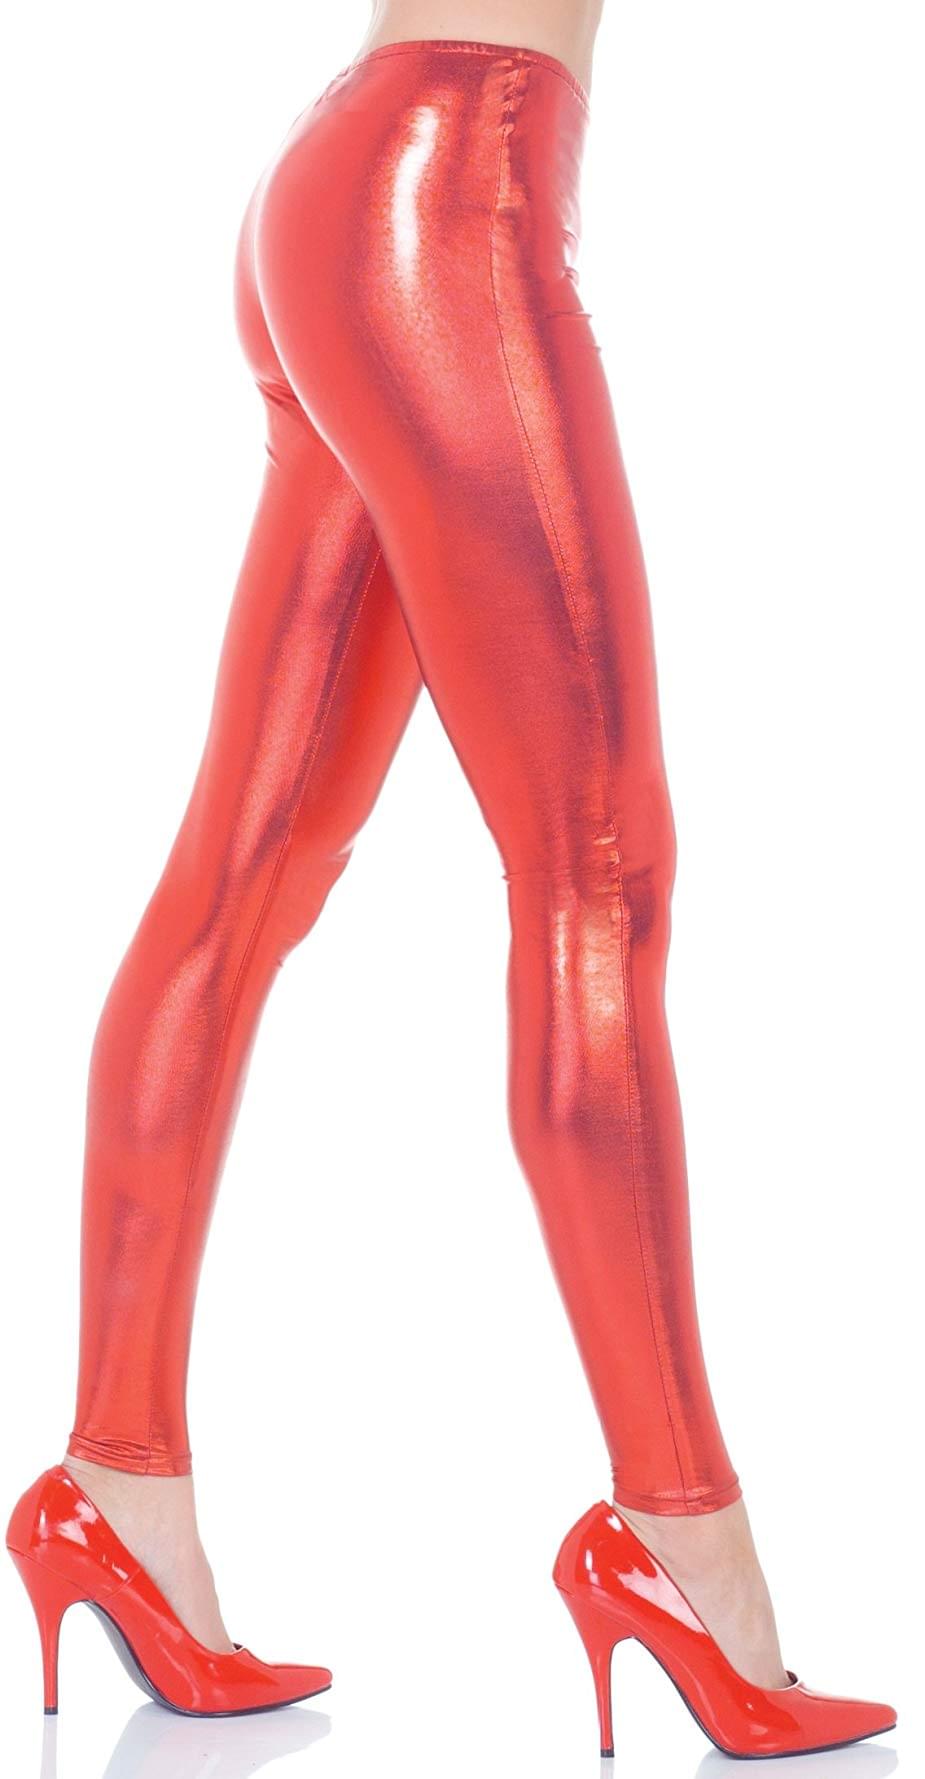 Leggings Costume Accessory Adult: Red